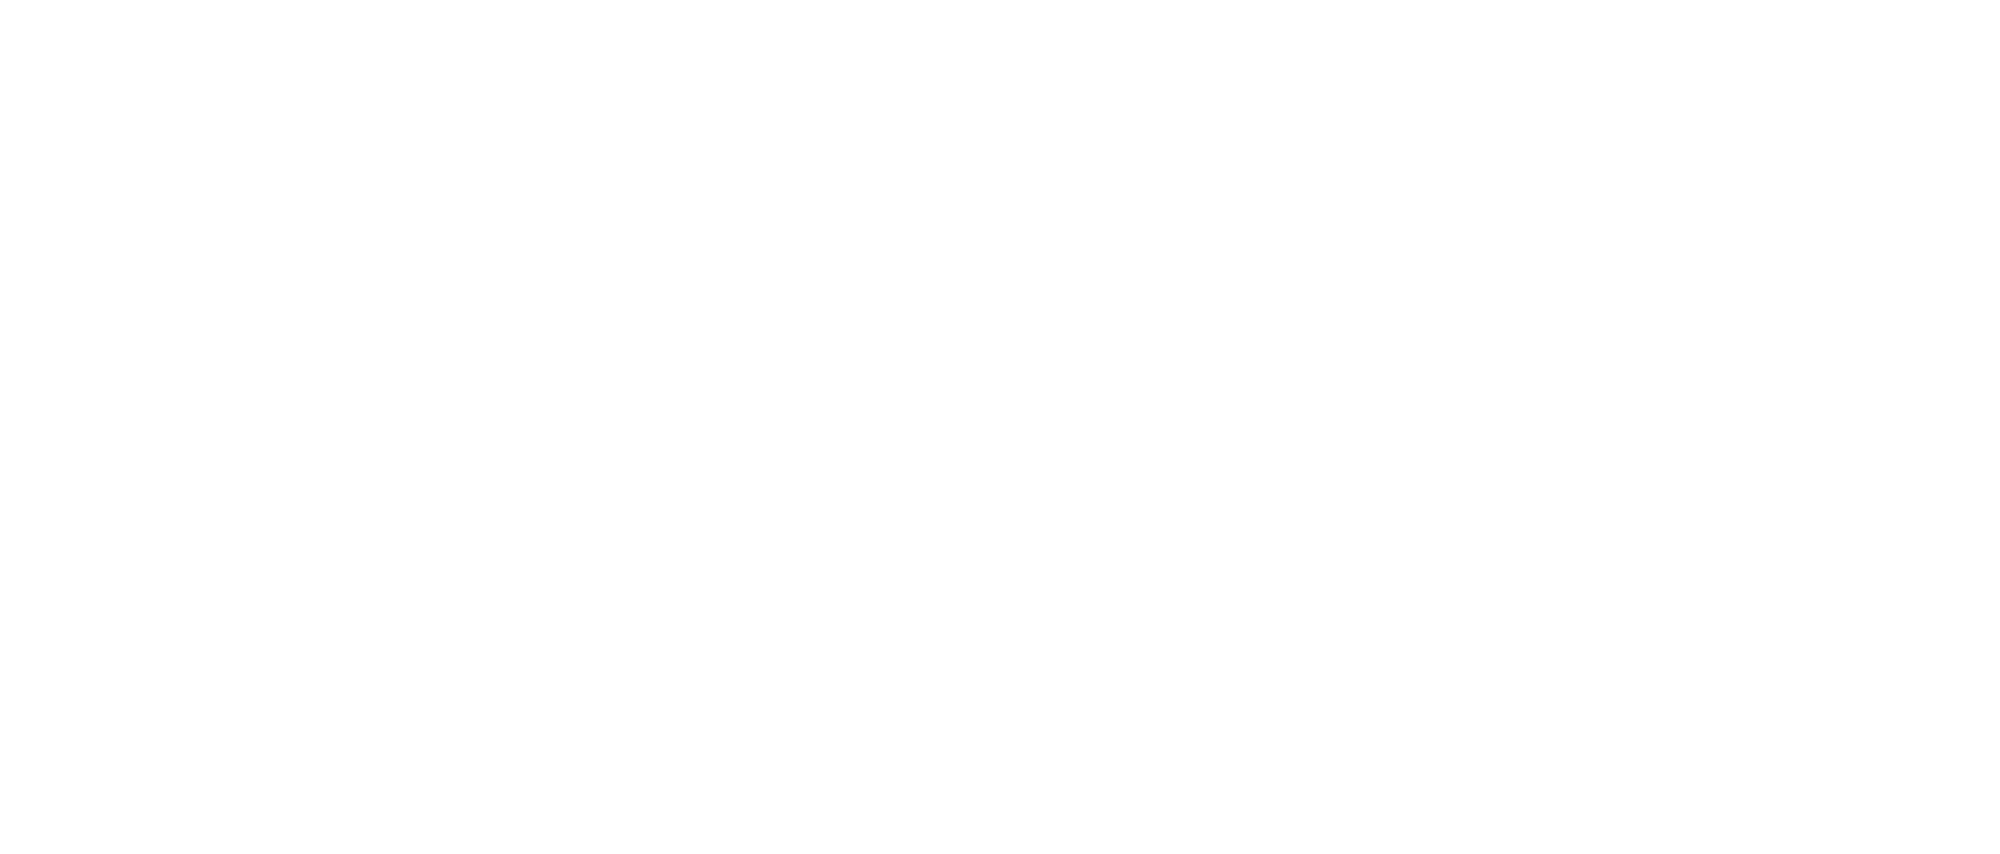 Gloria Deo Music.org